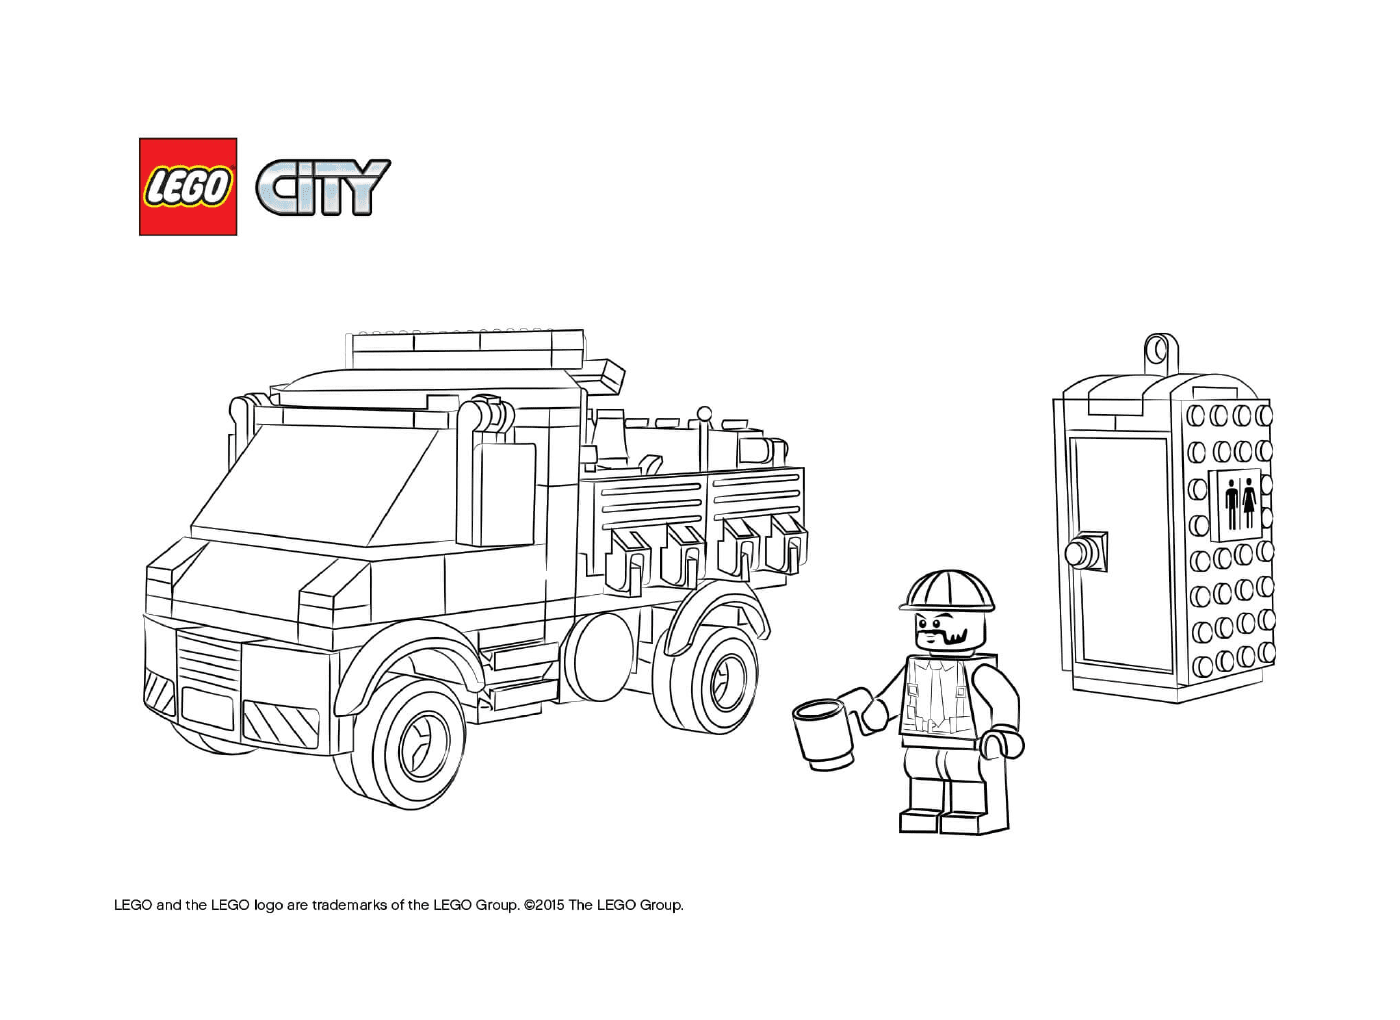   Camion de service Lego City 